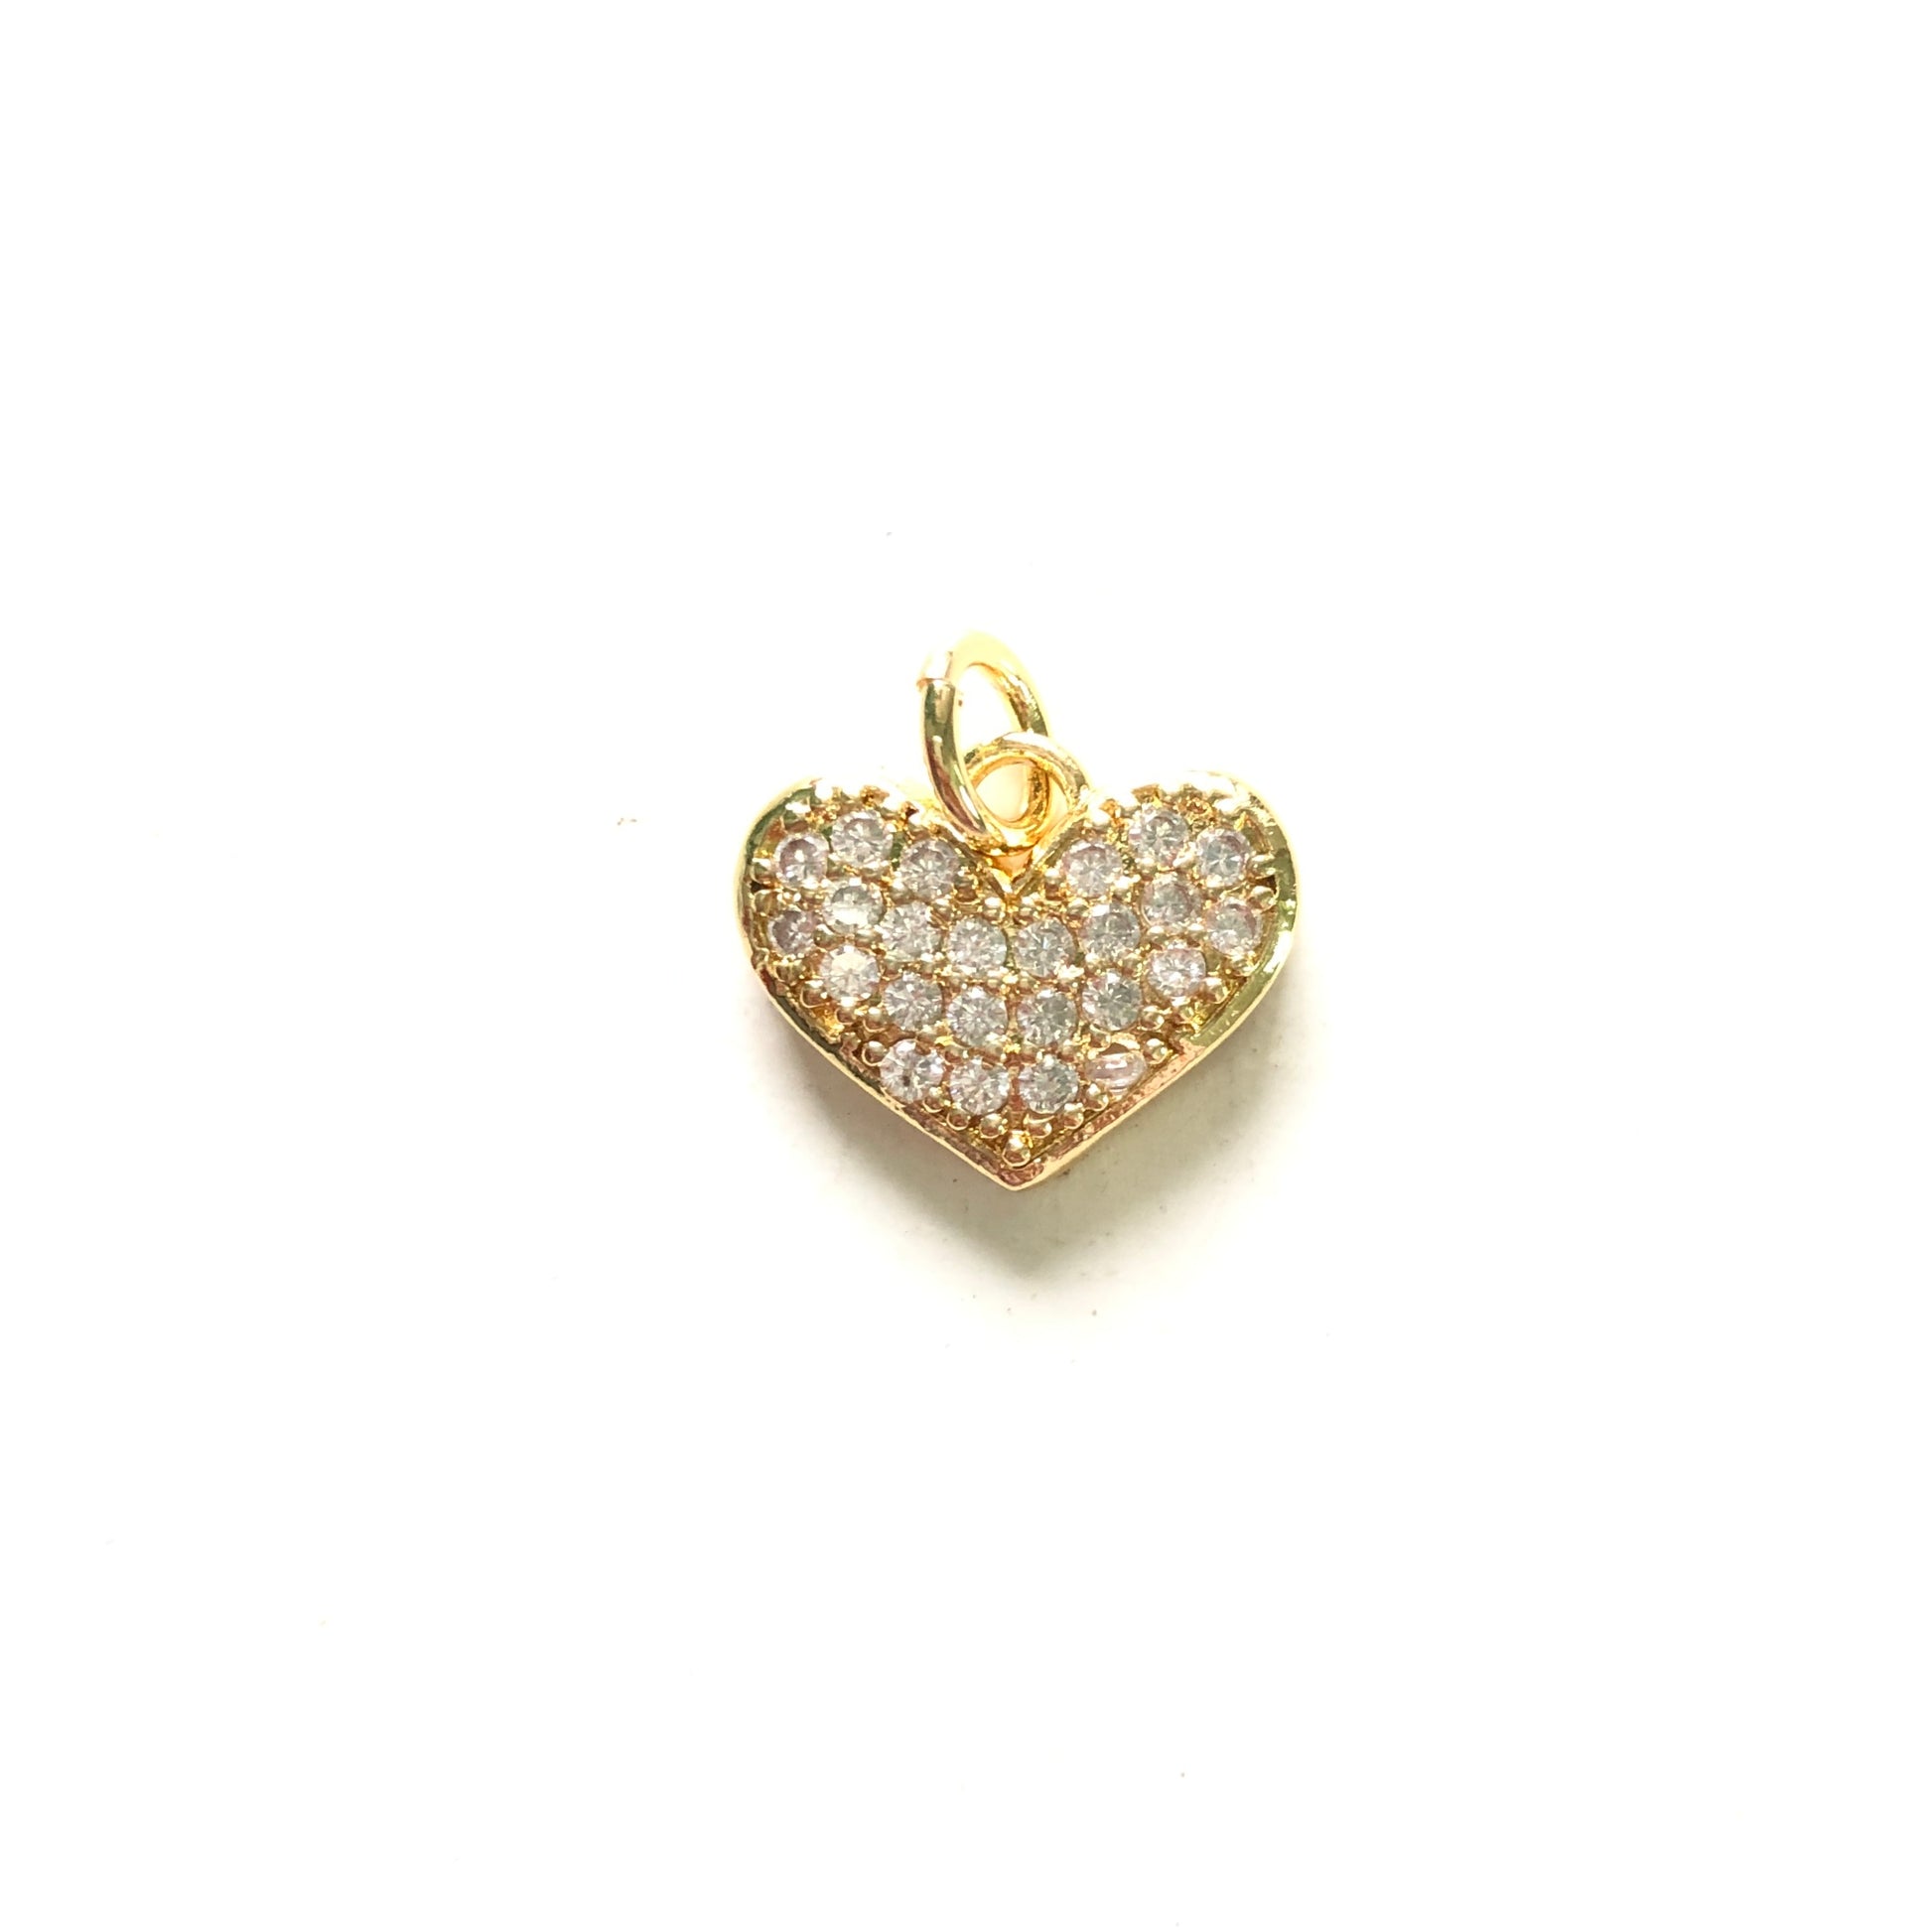 10pcs/lot 15*12mm Small Size CZ Paved Heart Charms Gold CZ Paved Charms Hearts Small Sizes Charms Beads Beyond